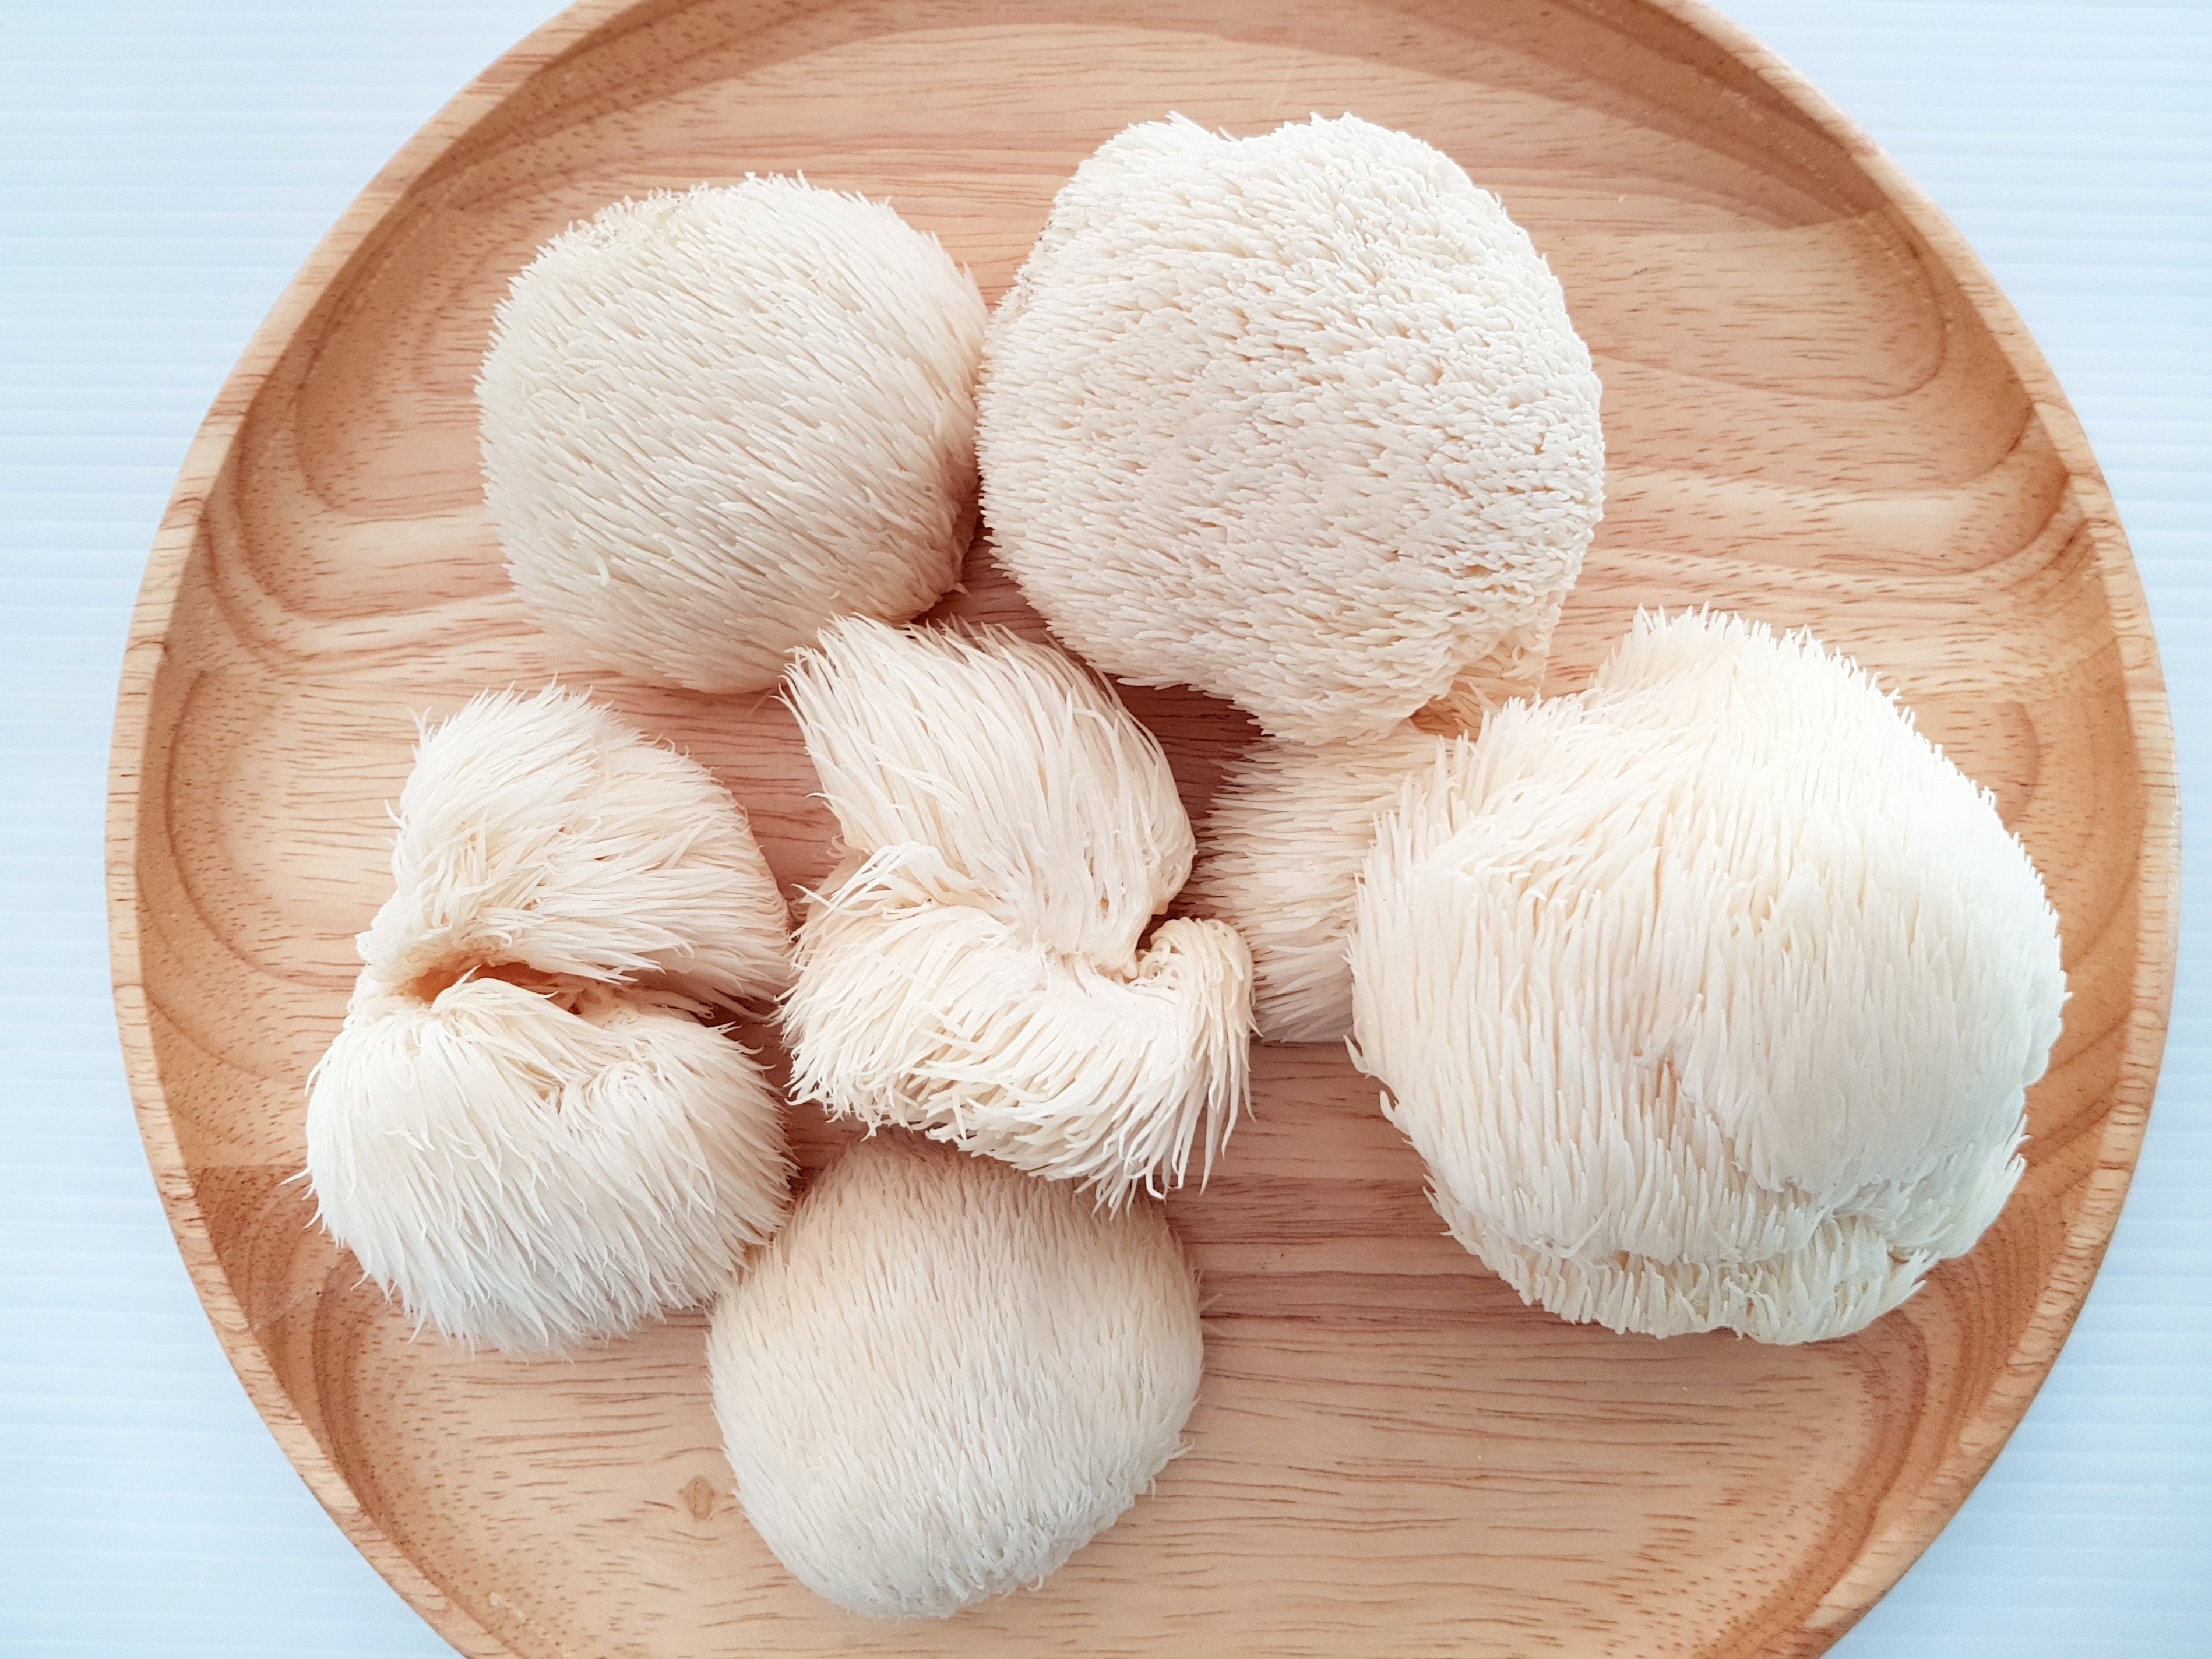 High Protein Mushrooms - Mushroom Revival -  Lion's mane mushroom